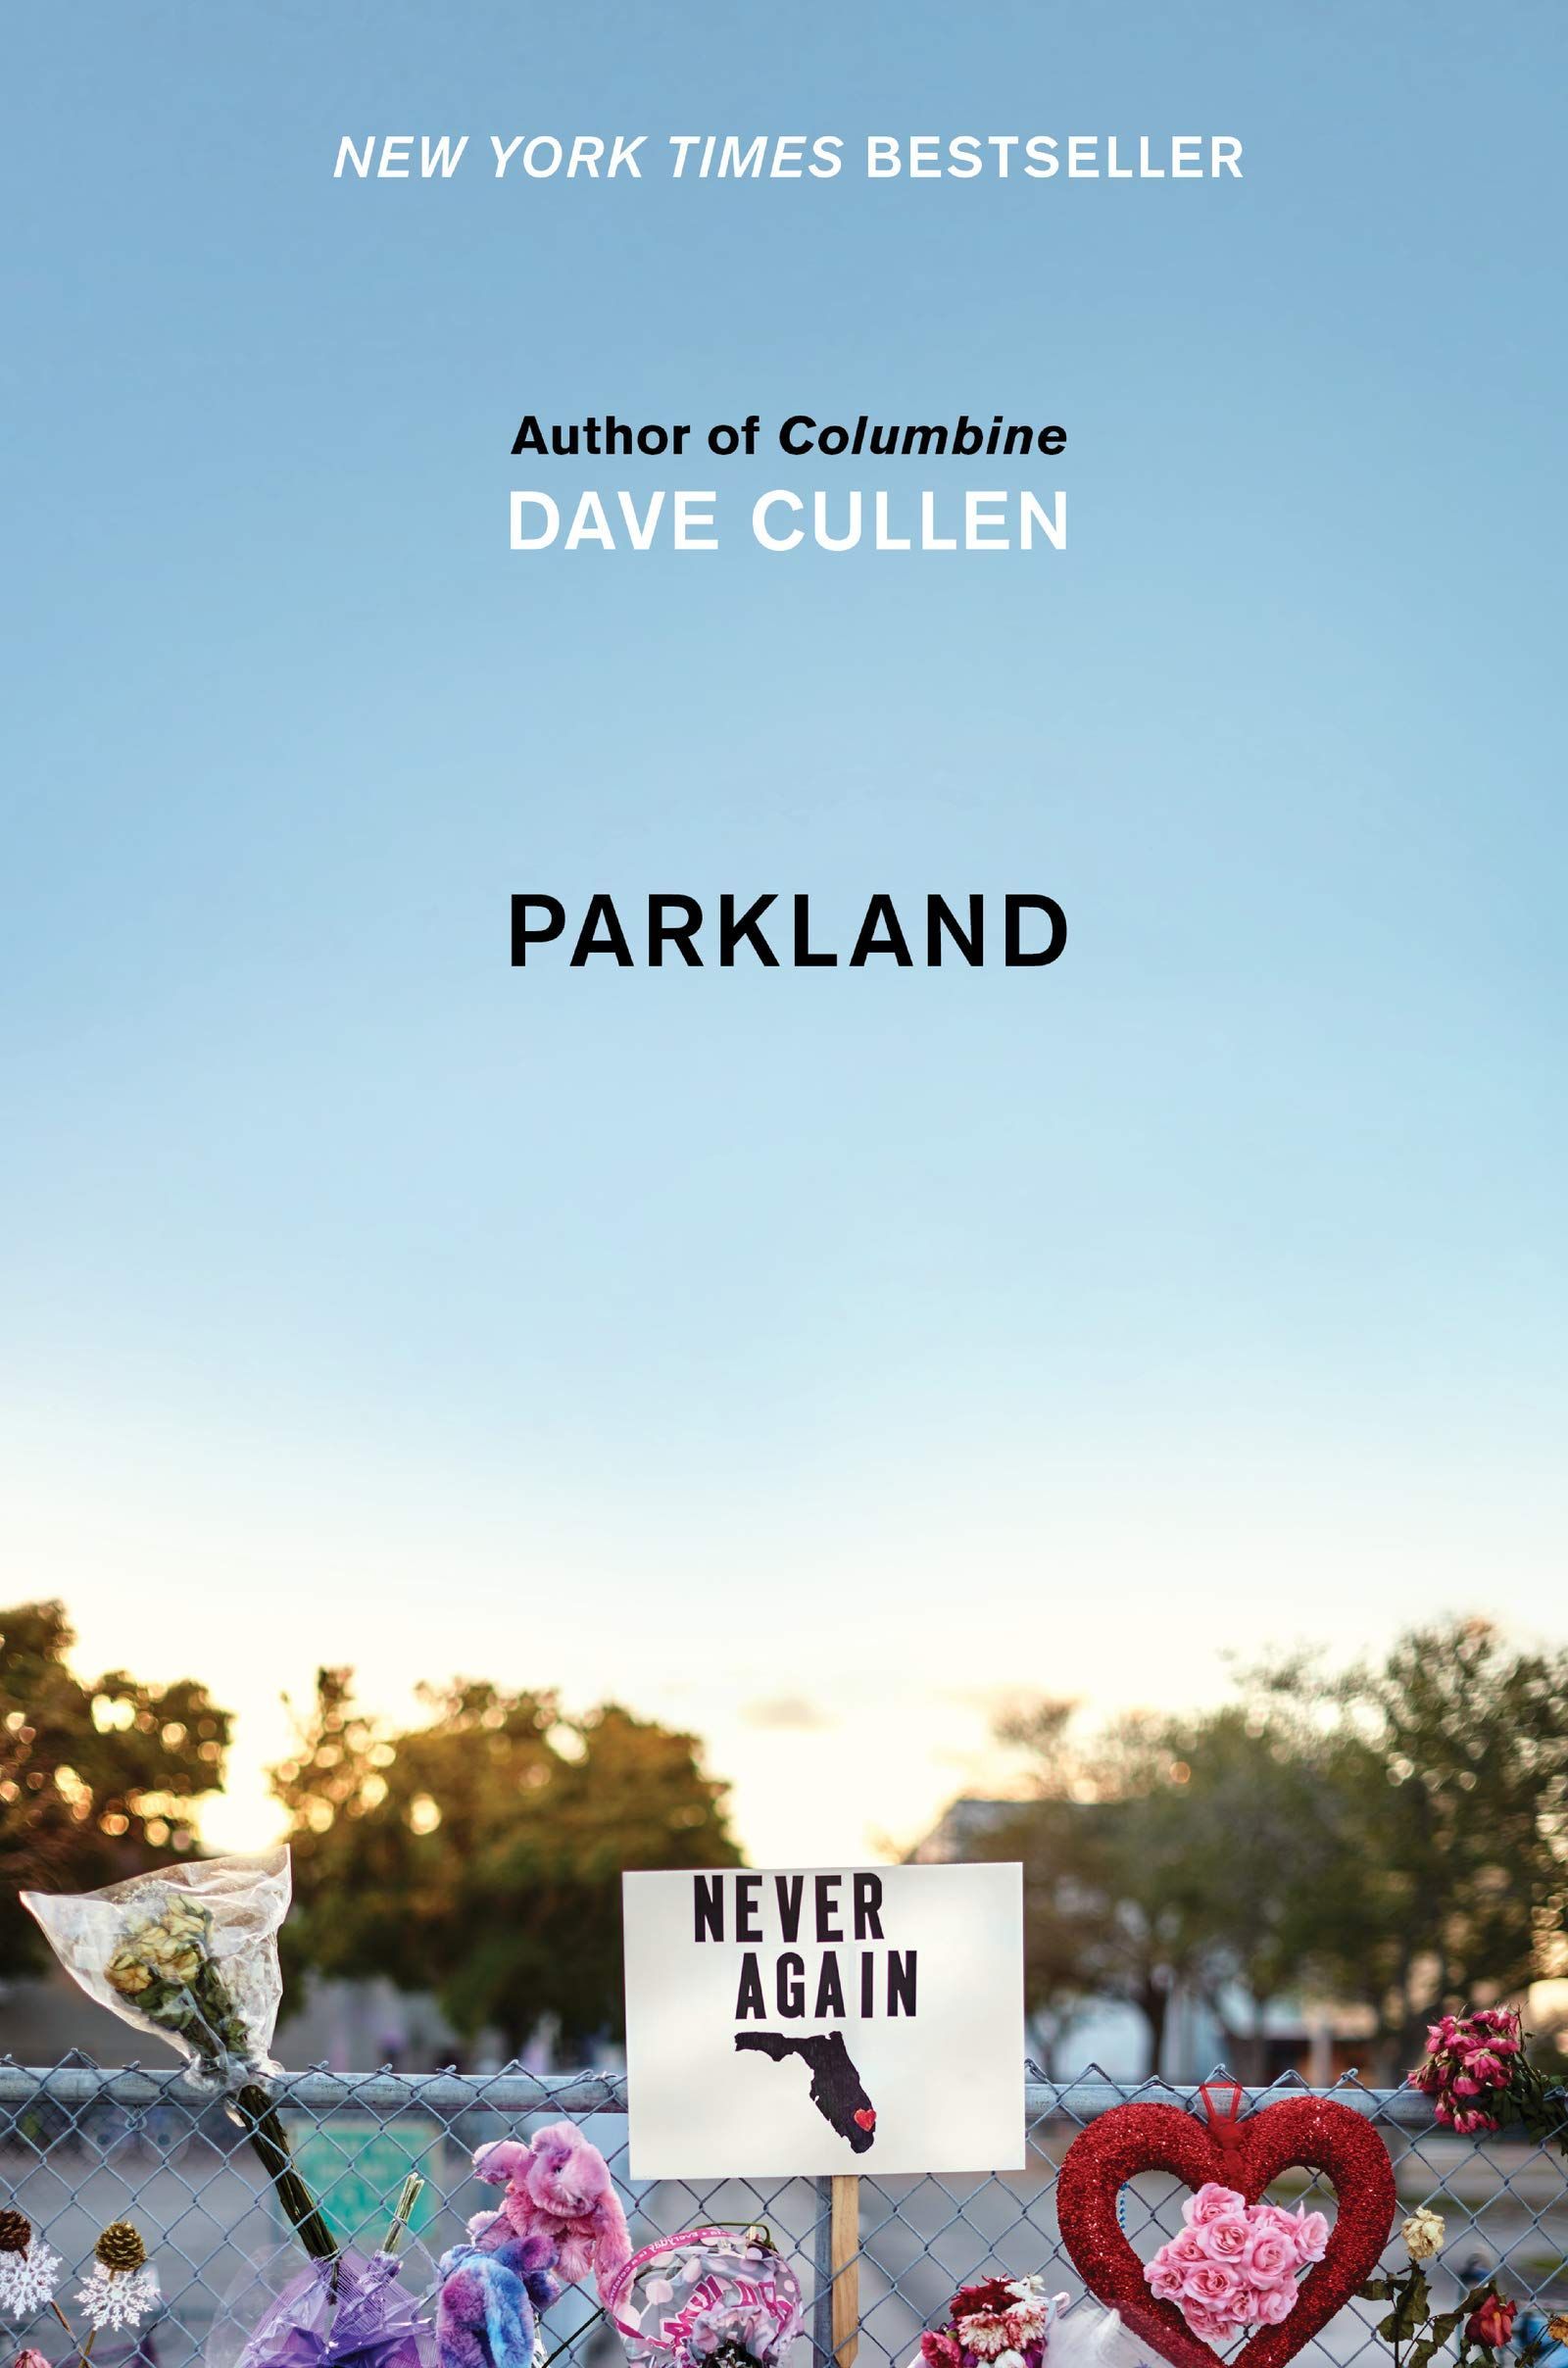 Parkland. Too Soon?